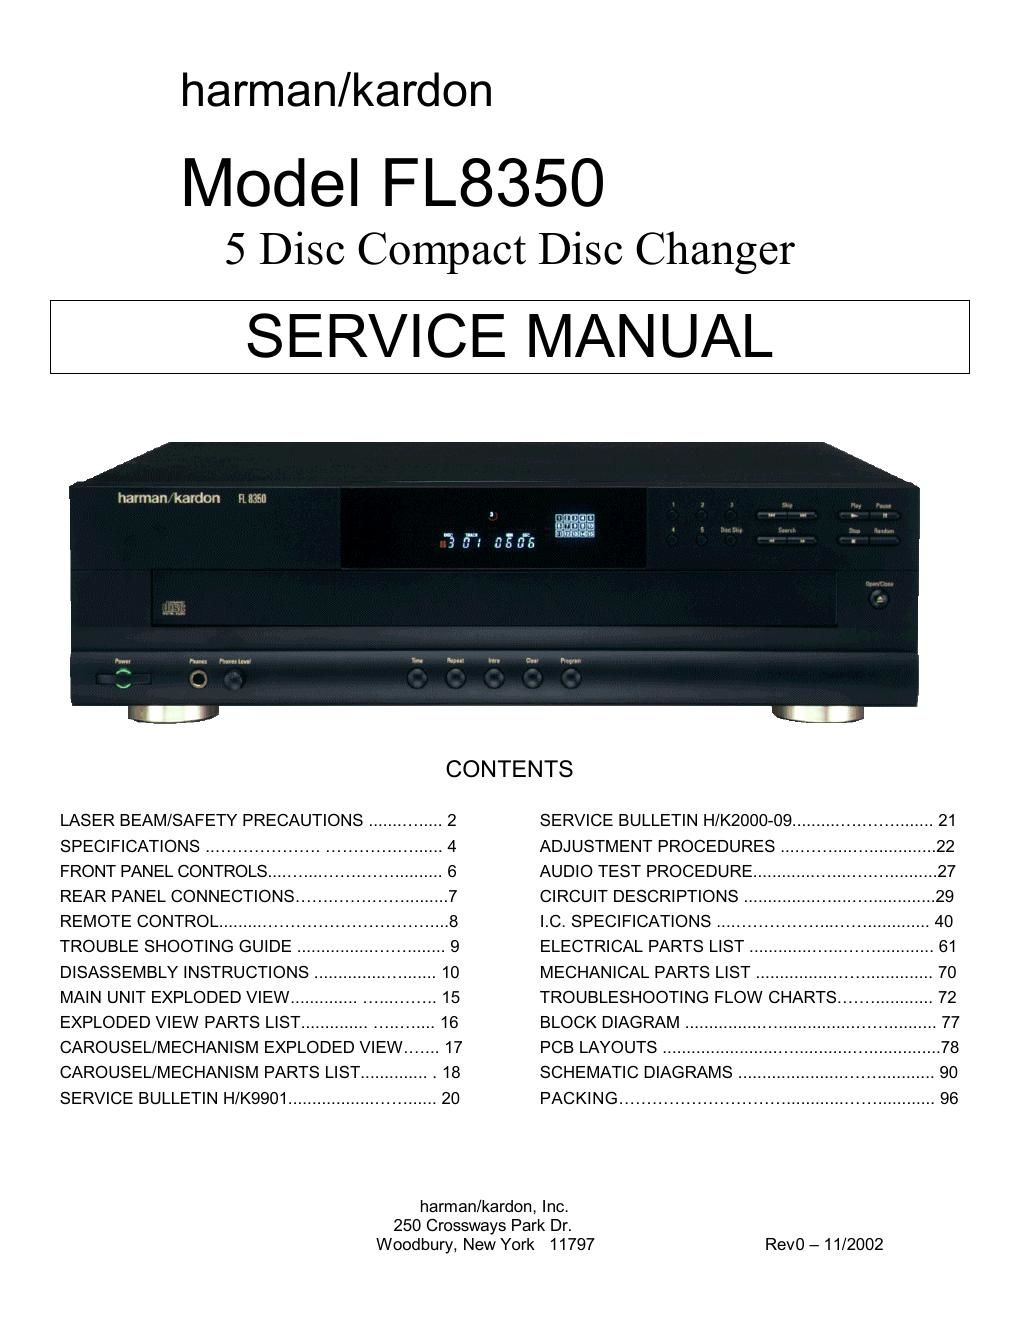 harman kardon fl 8350 service manual